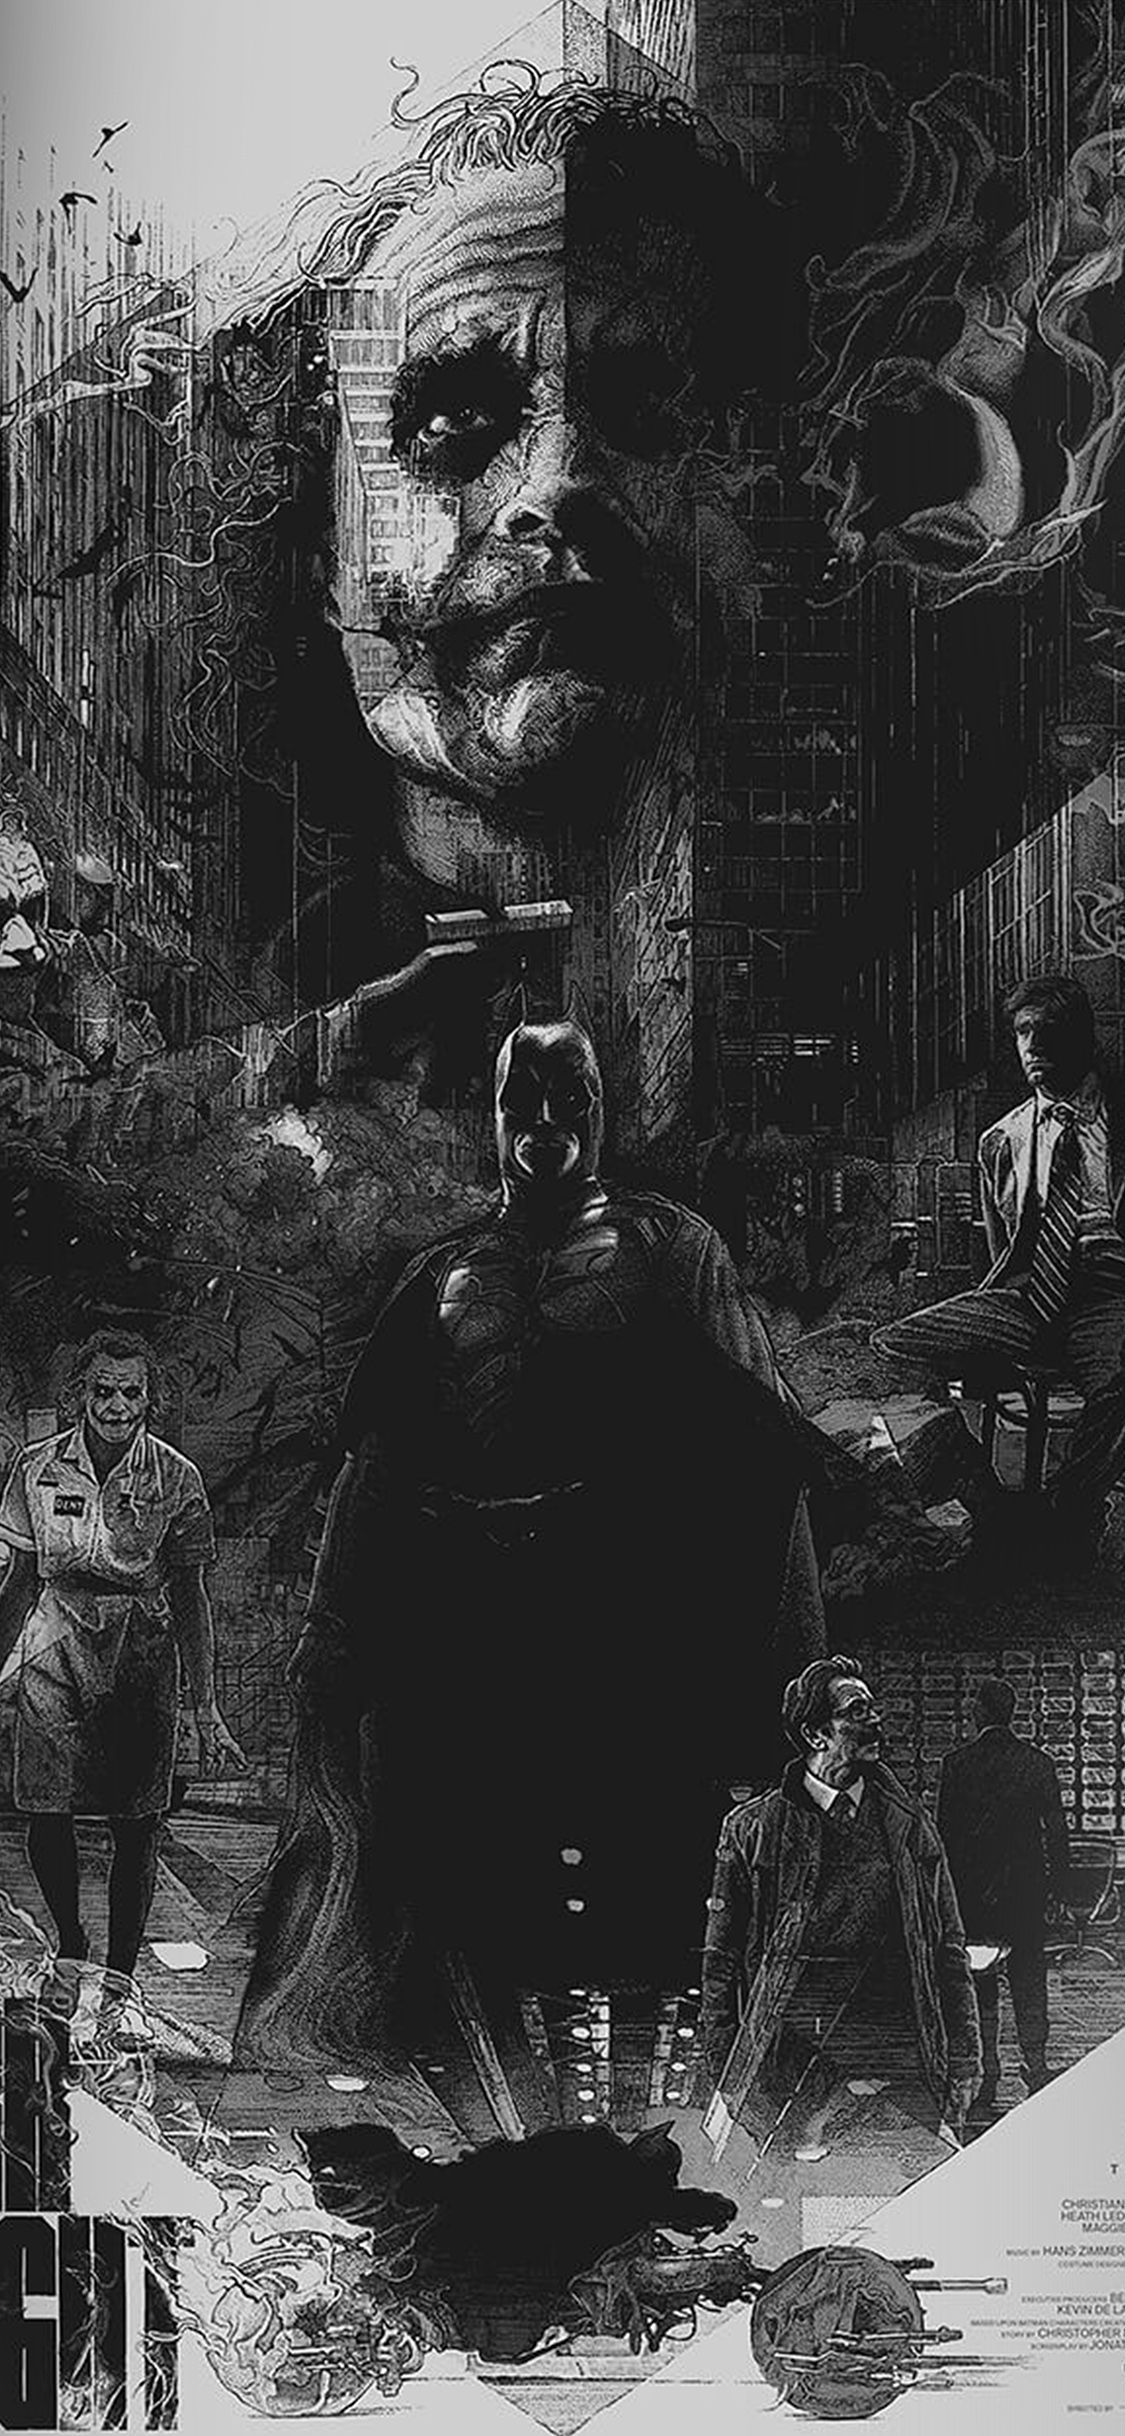 iPhone X wallpaper. joker batman poster film hero illustration art